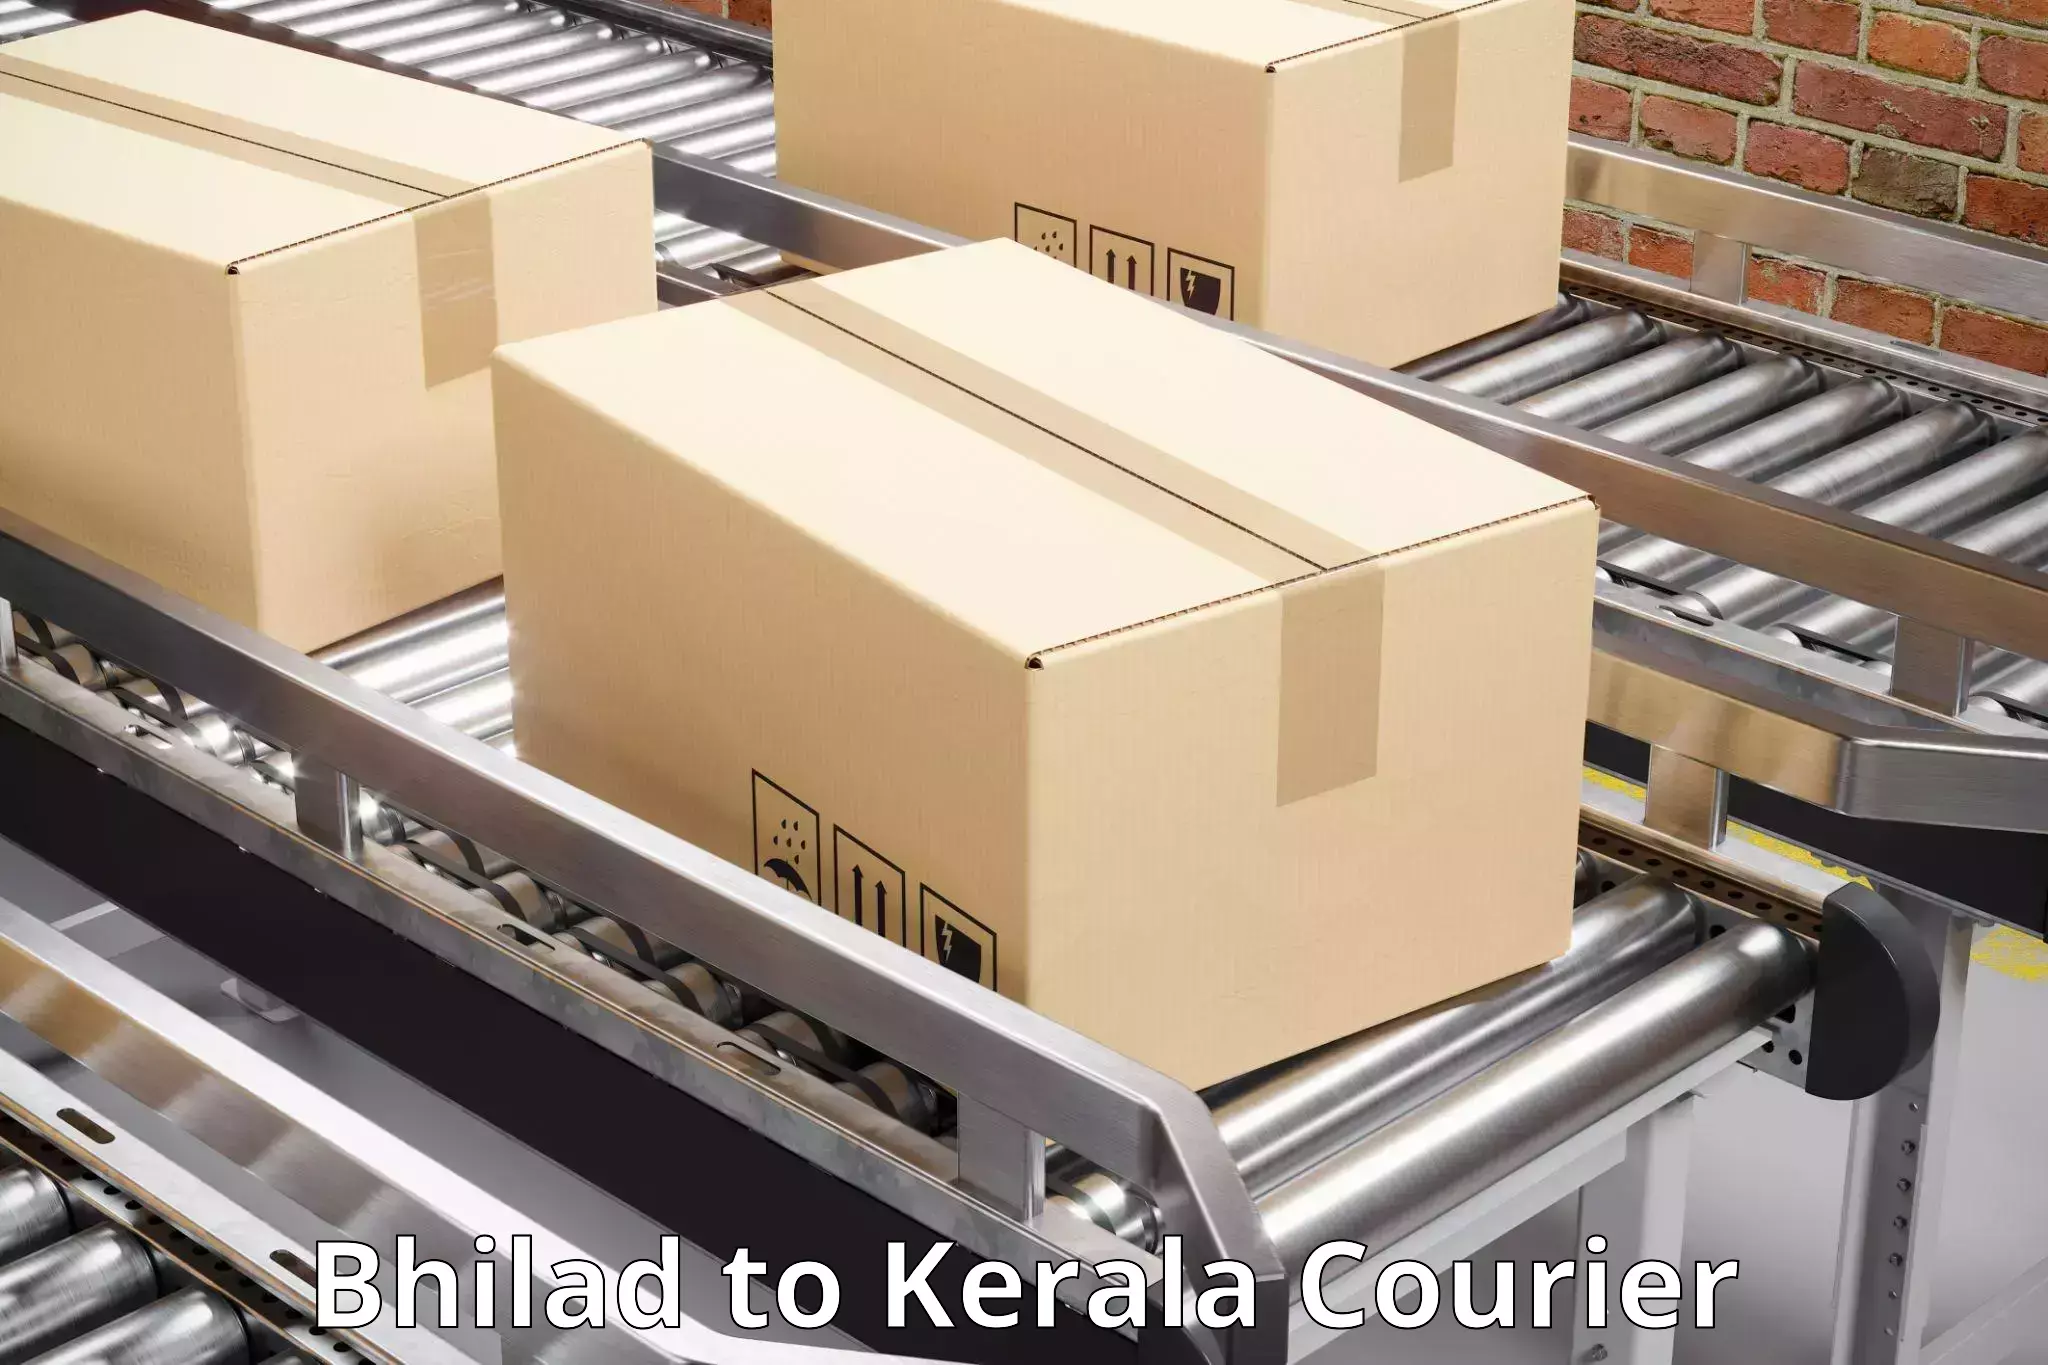 Courier service booking Bhilad to Perumbavoor